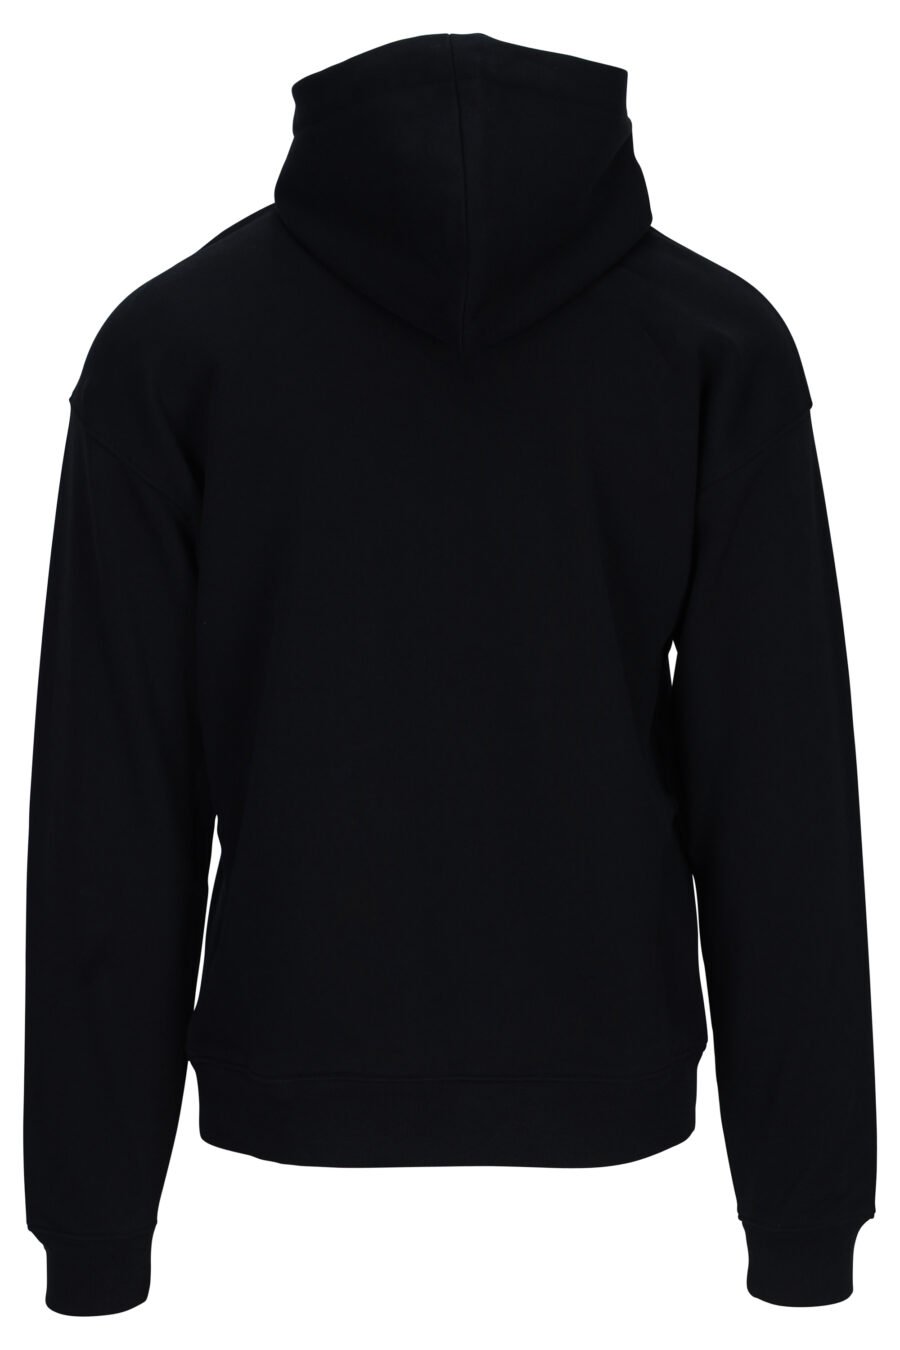 Black hooded sweatshirt with logo "teddy tailor" - 667113125152 1